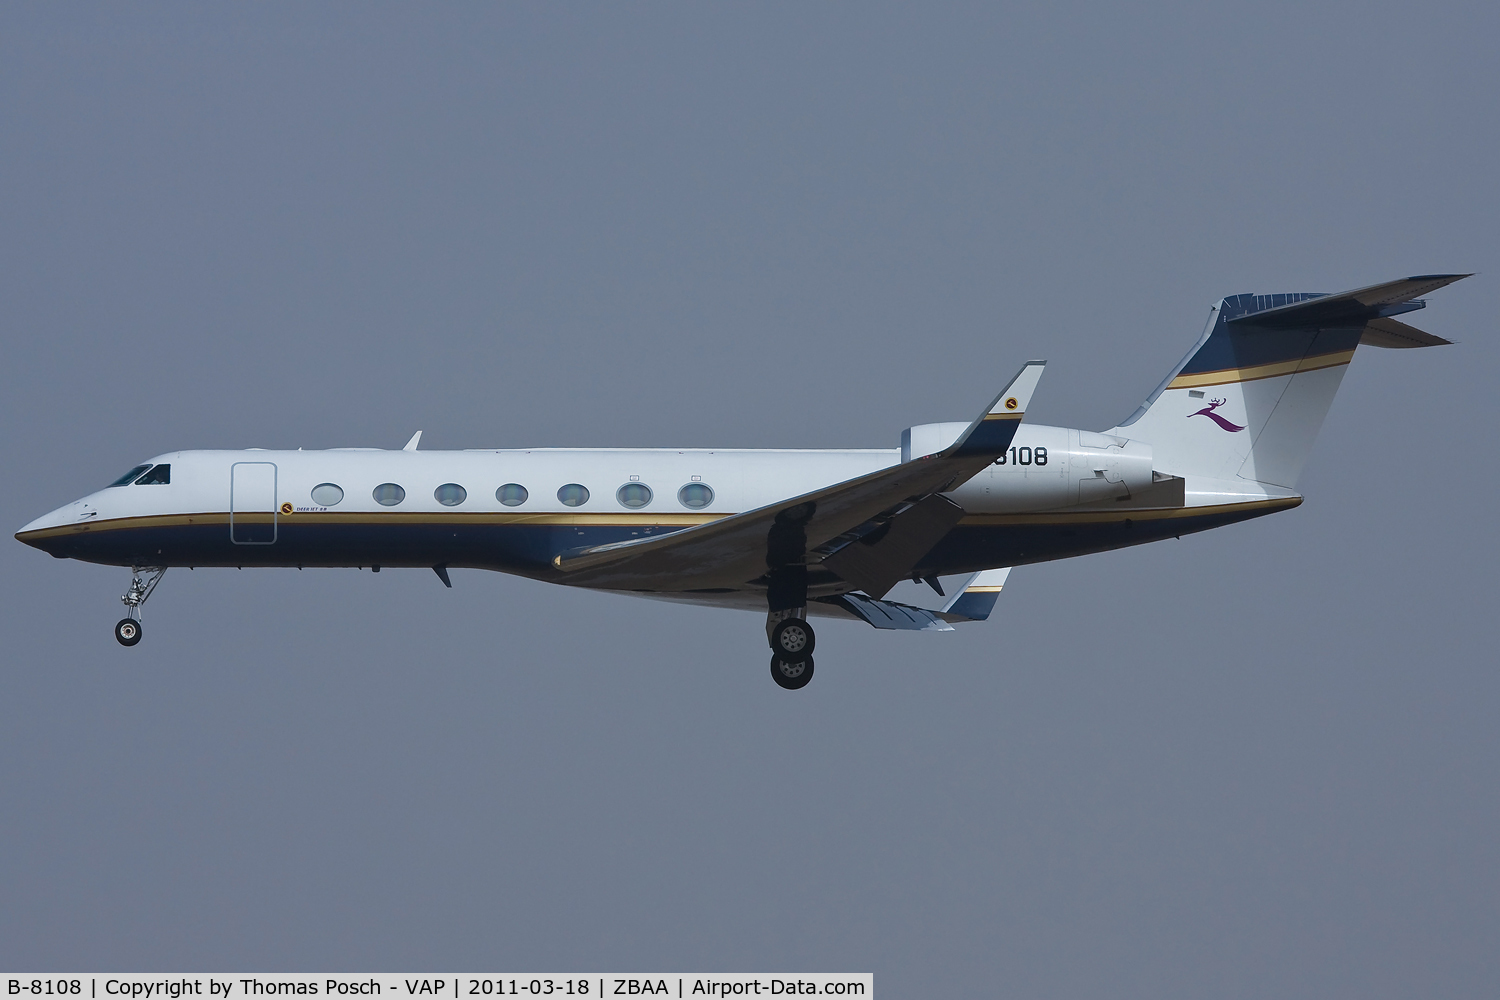 B-8108, 2006 Gulfstream Aerospace GV-SP (G550) C/N 5120, Deer Jet